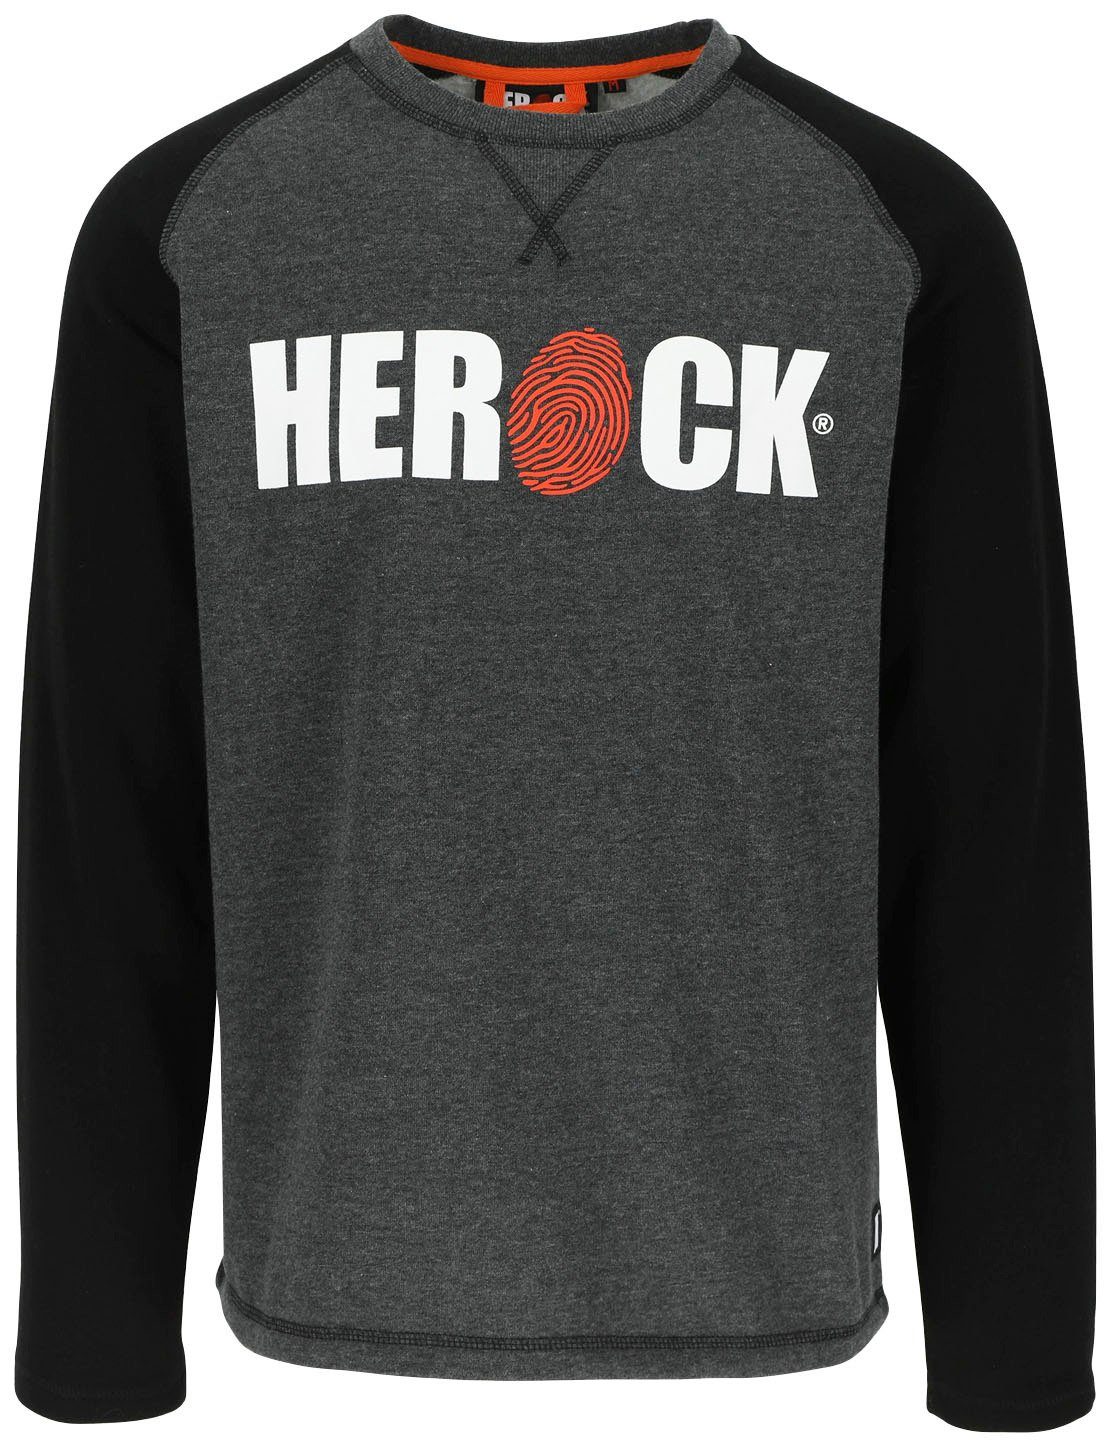 Schwarz/Grau 2-Farbig Herock mit ROLES Sweater T-Shirt/Sweater, Aufdruck, Herock®- Langarmshirt Rundhals,